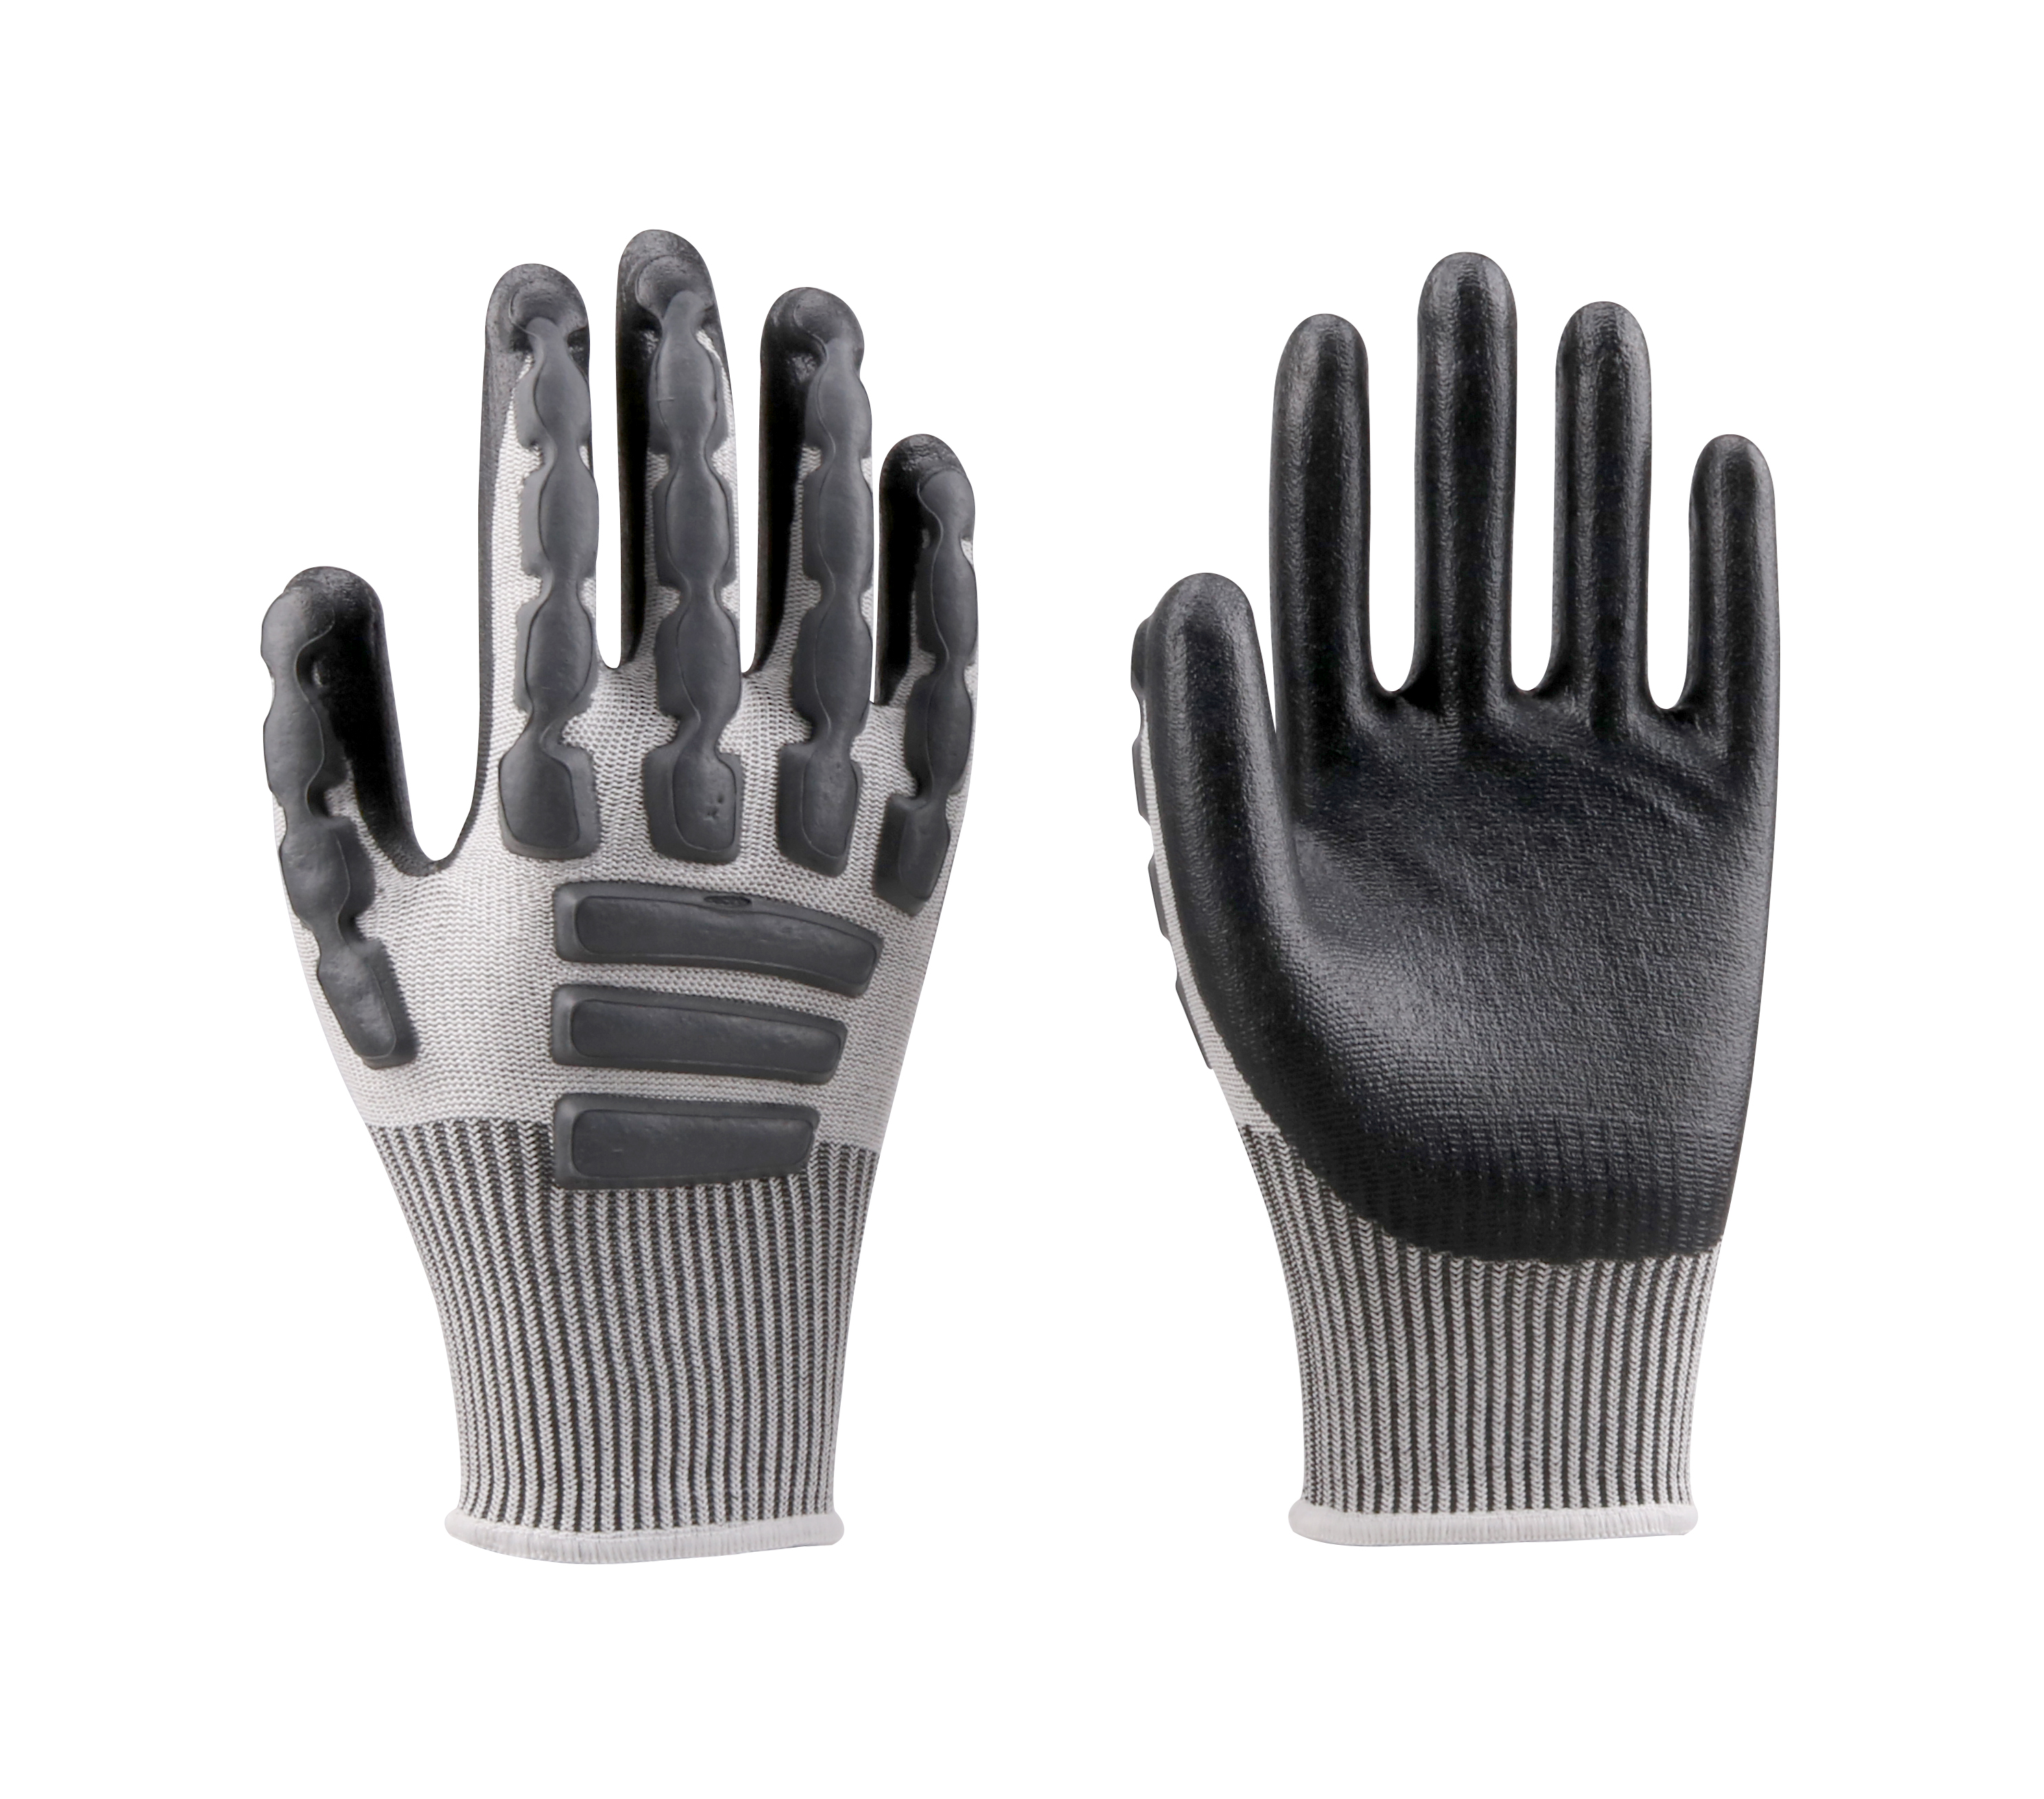 13G HPPE+Spandex+Nylon+Glass Fiber Liner Nitrile Foam+Latex Dots Coated Gloves, EN388 4X43CP, ANSI A3 